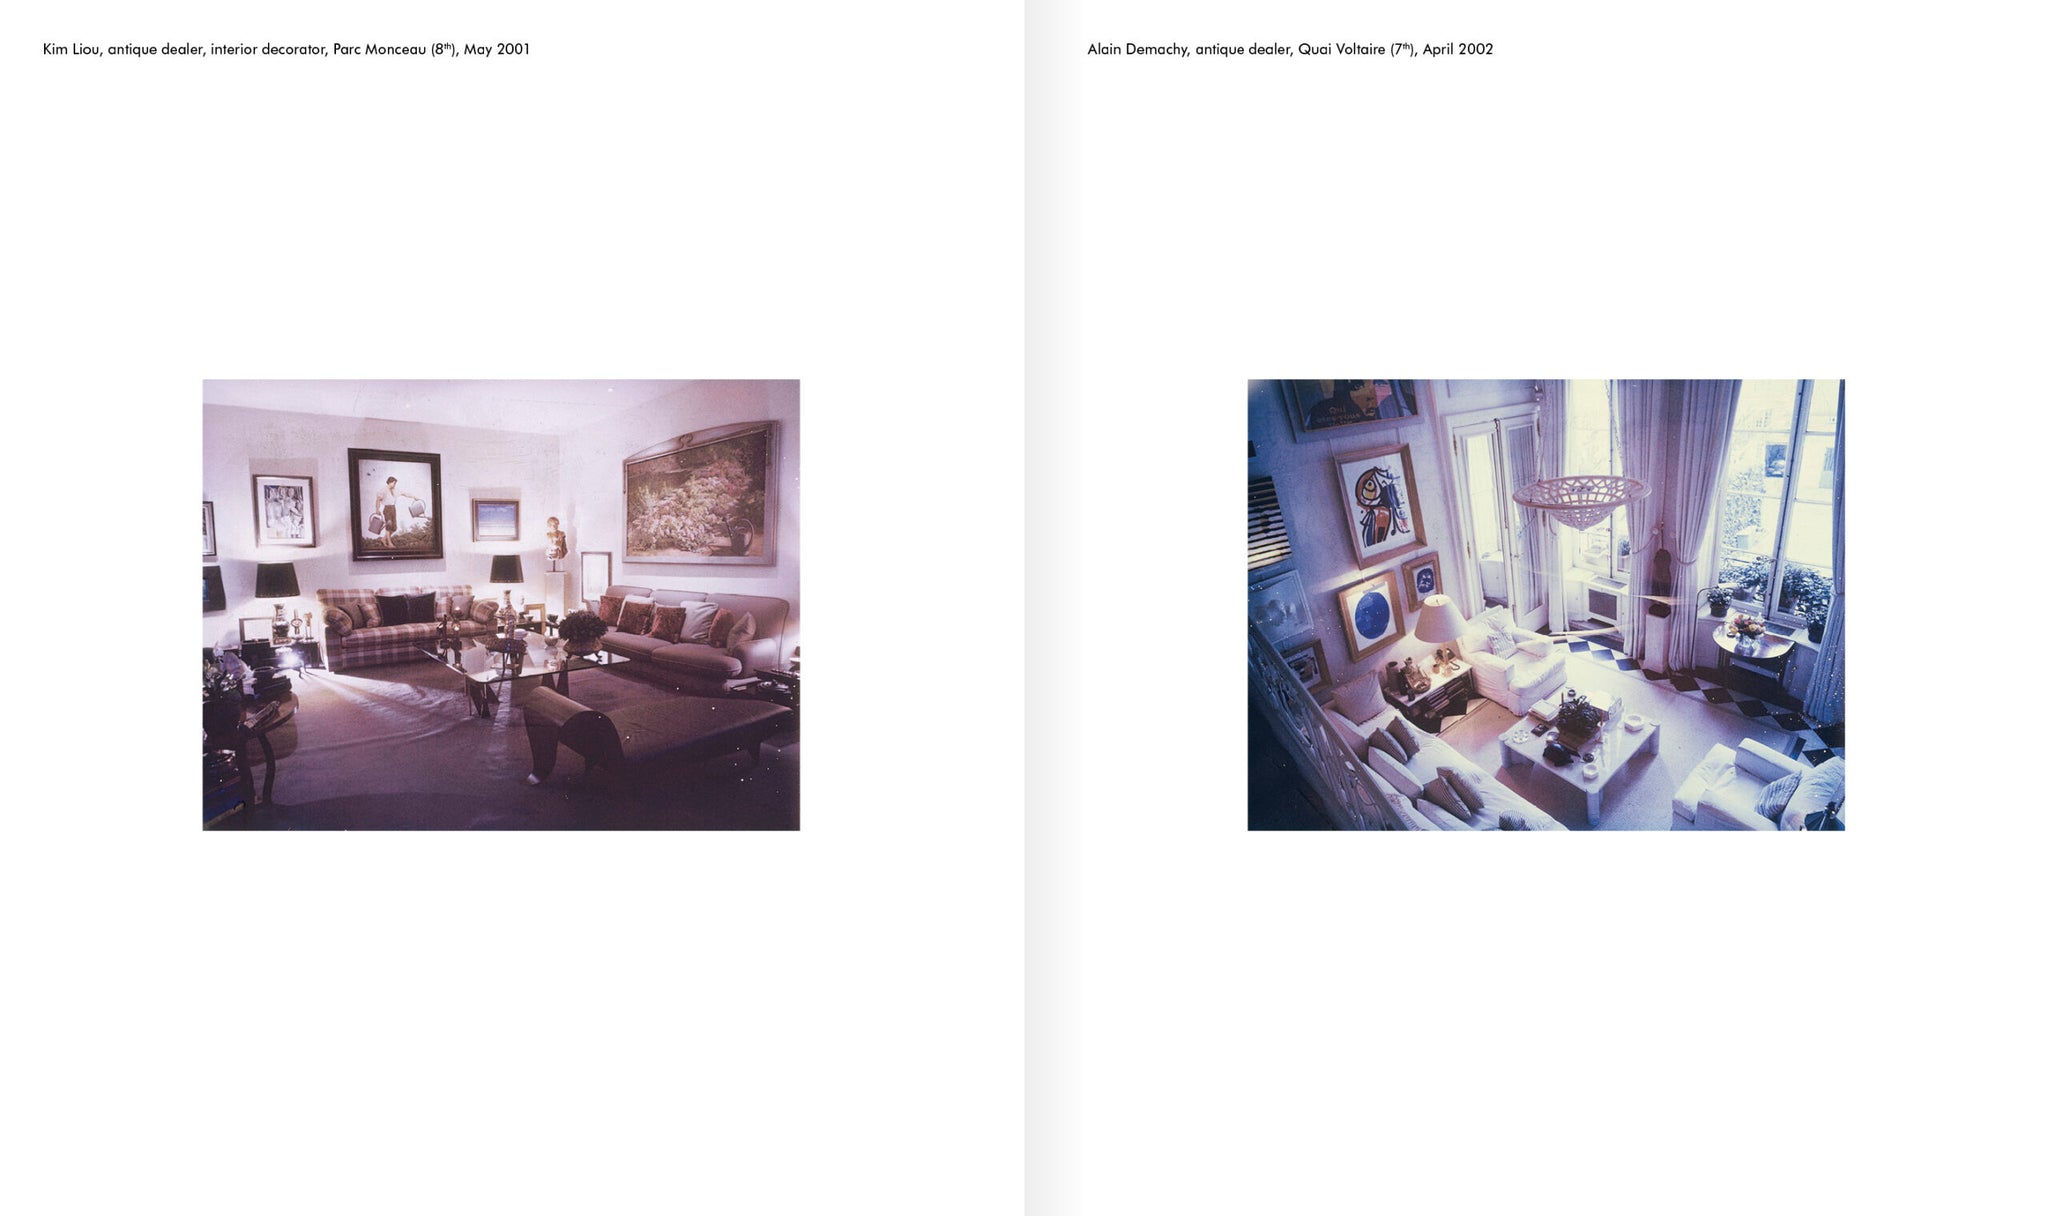 Paris Living Rooms - Dominique Nabokov